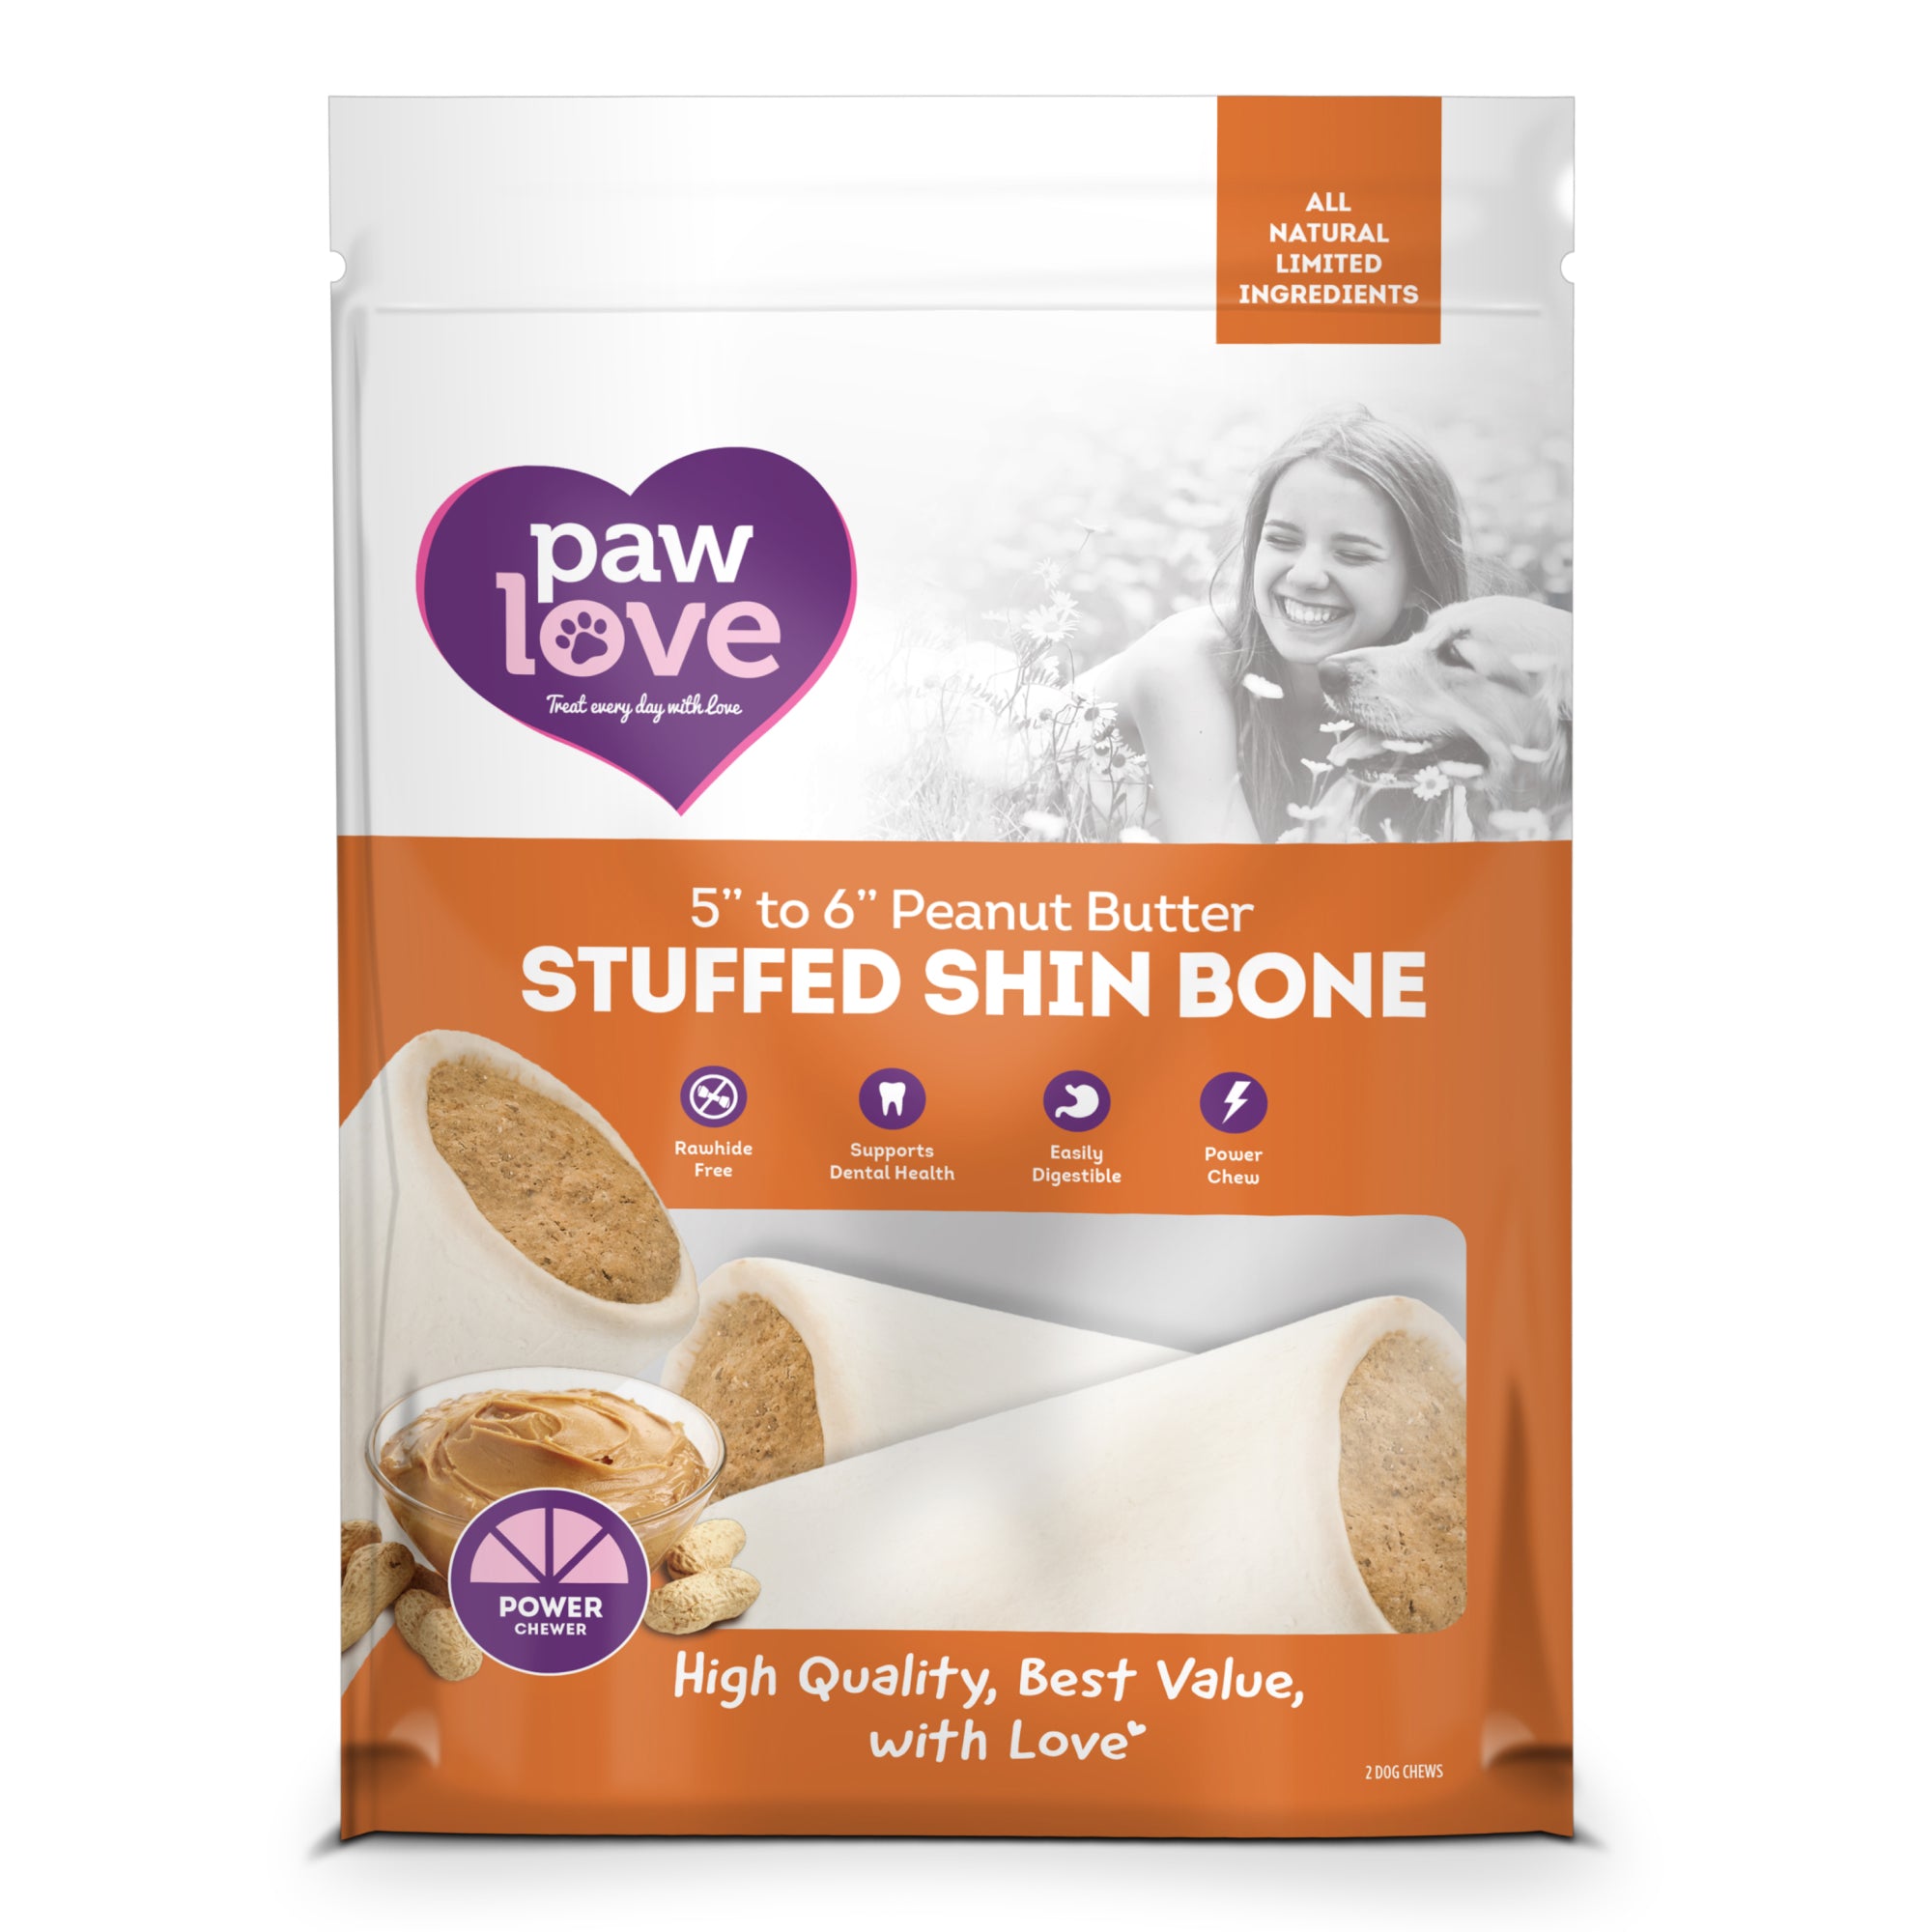 Paw Love 5-6" Peanut Butter Stuffed Shin bone.